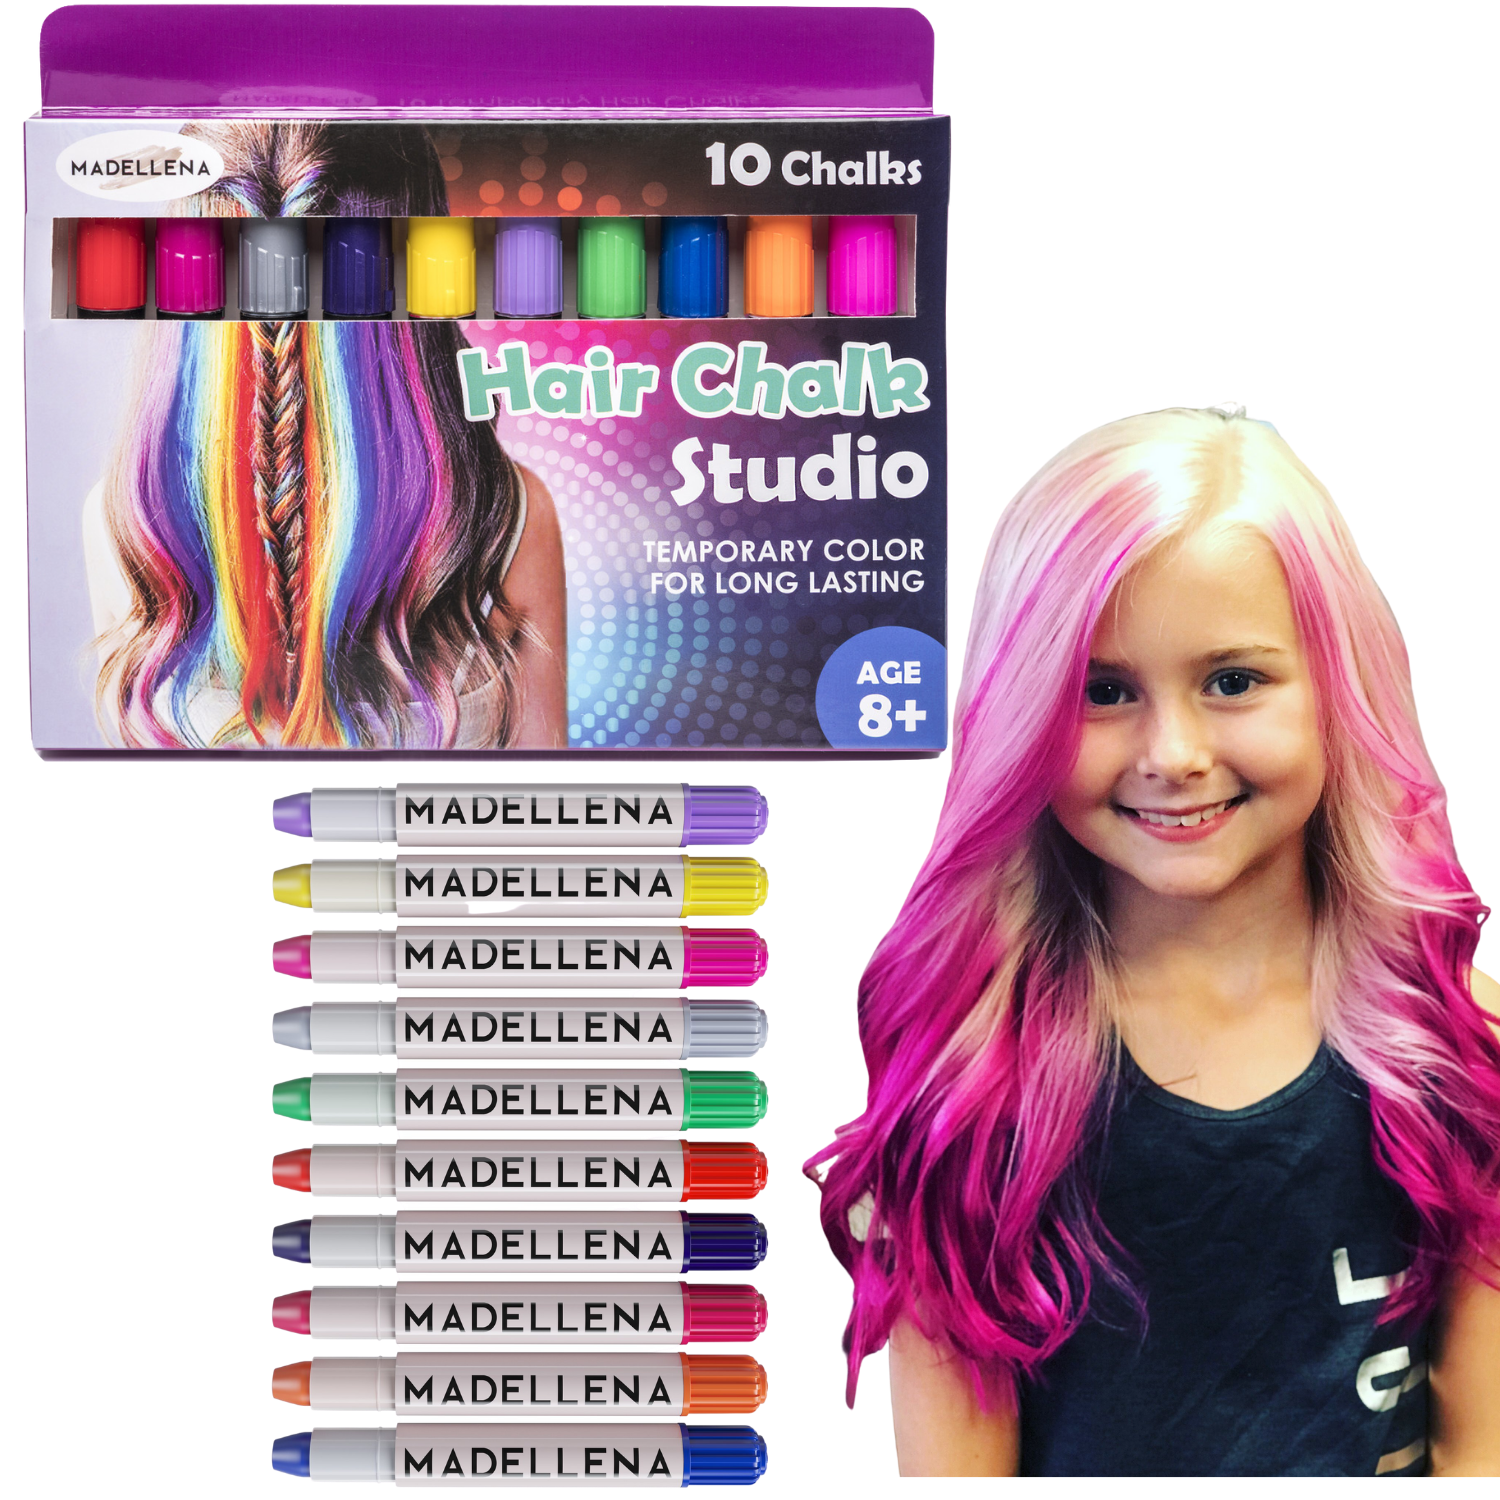 Cevioce Hair Chalk for Girls,Temporary Hair Color Pink Hair